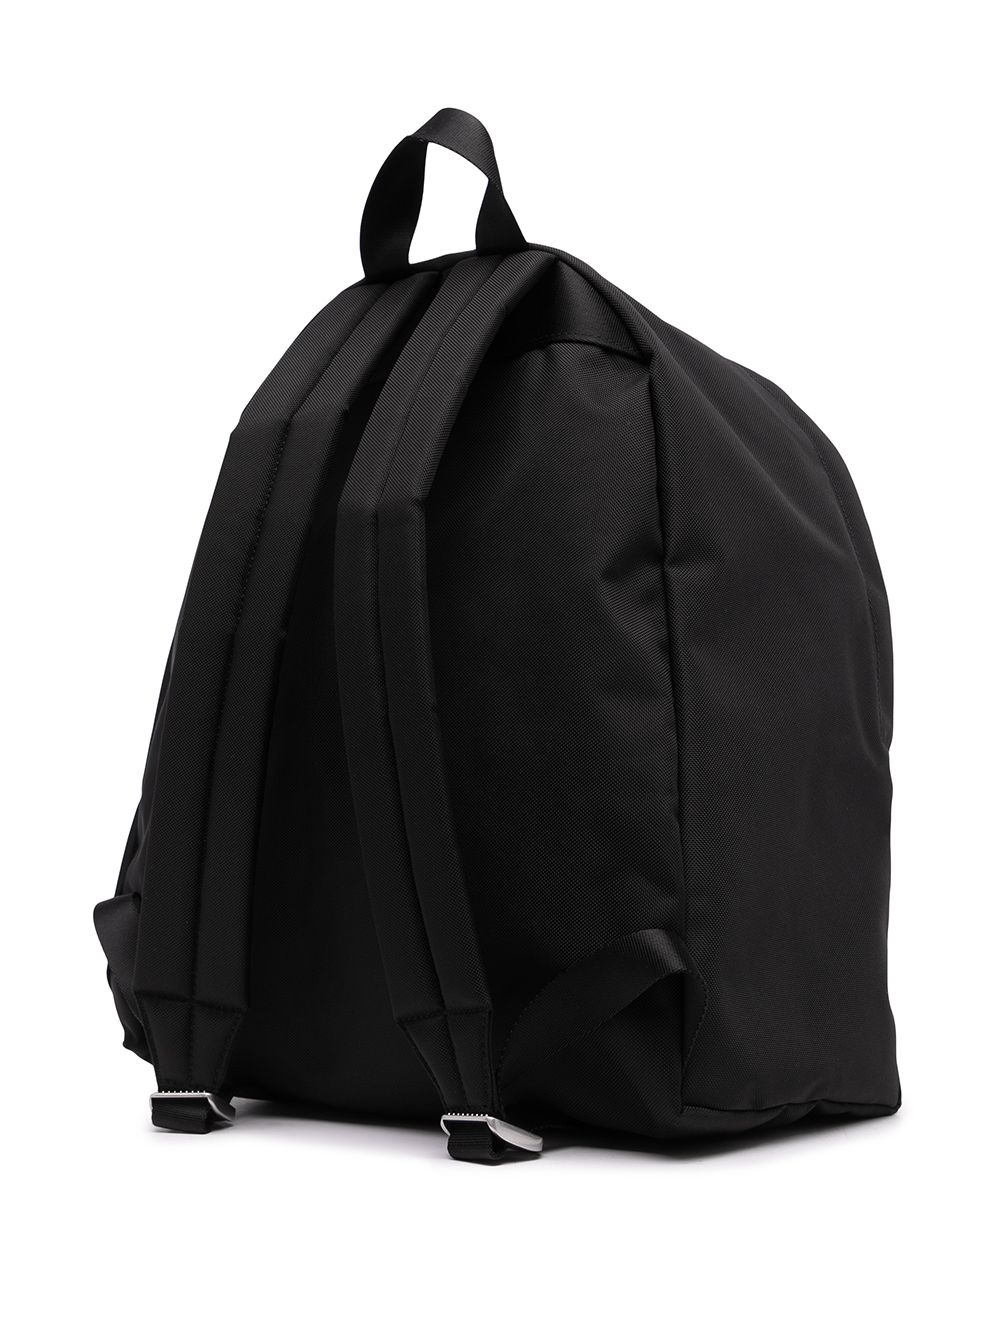 3.1 Phillip Lim Deconstructed Duffle Bag - Black